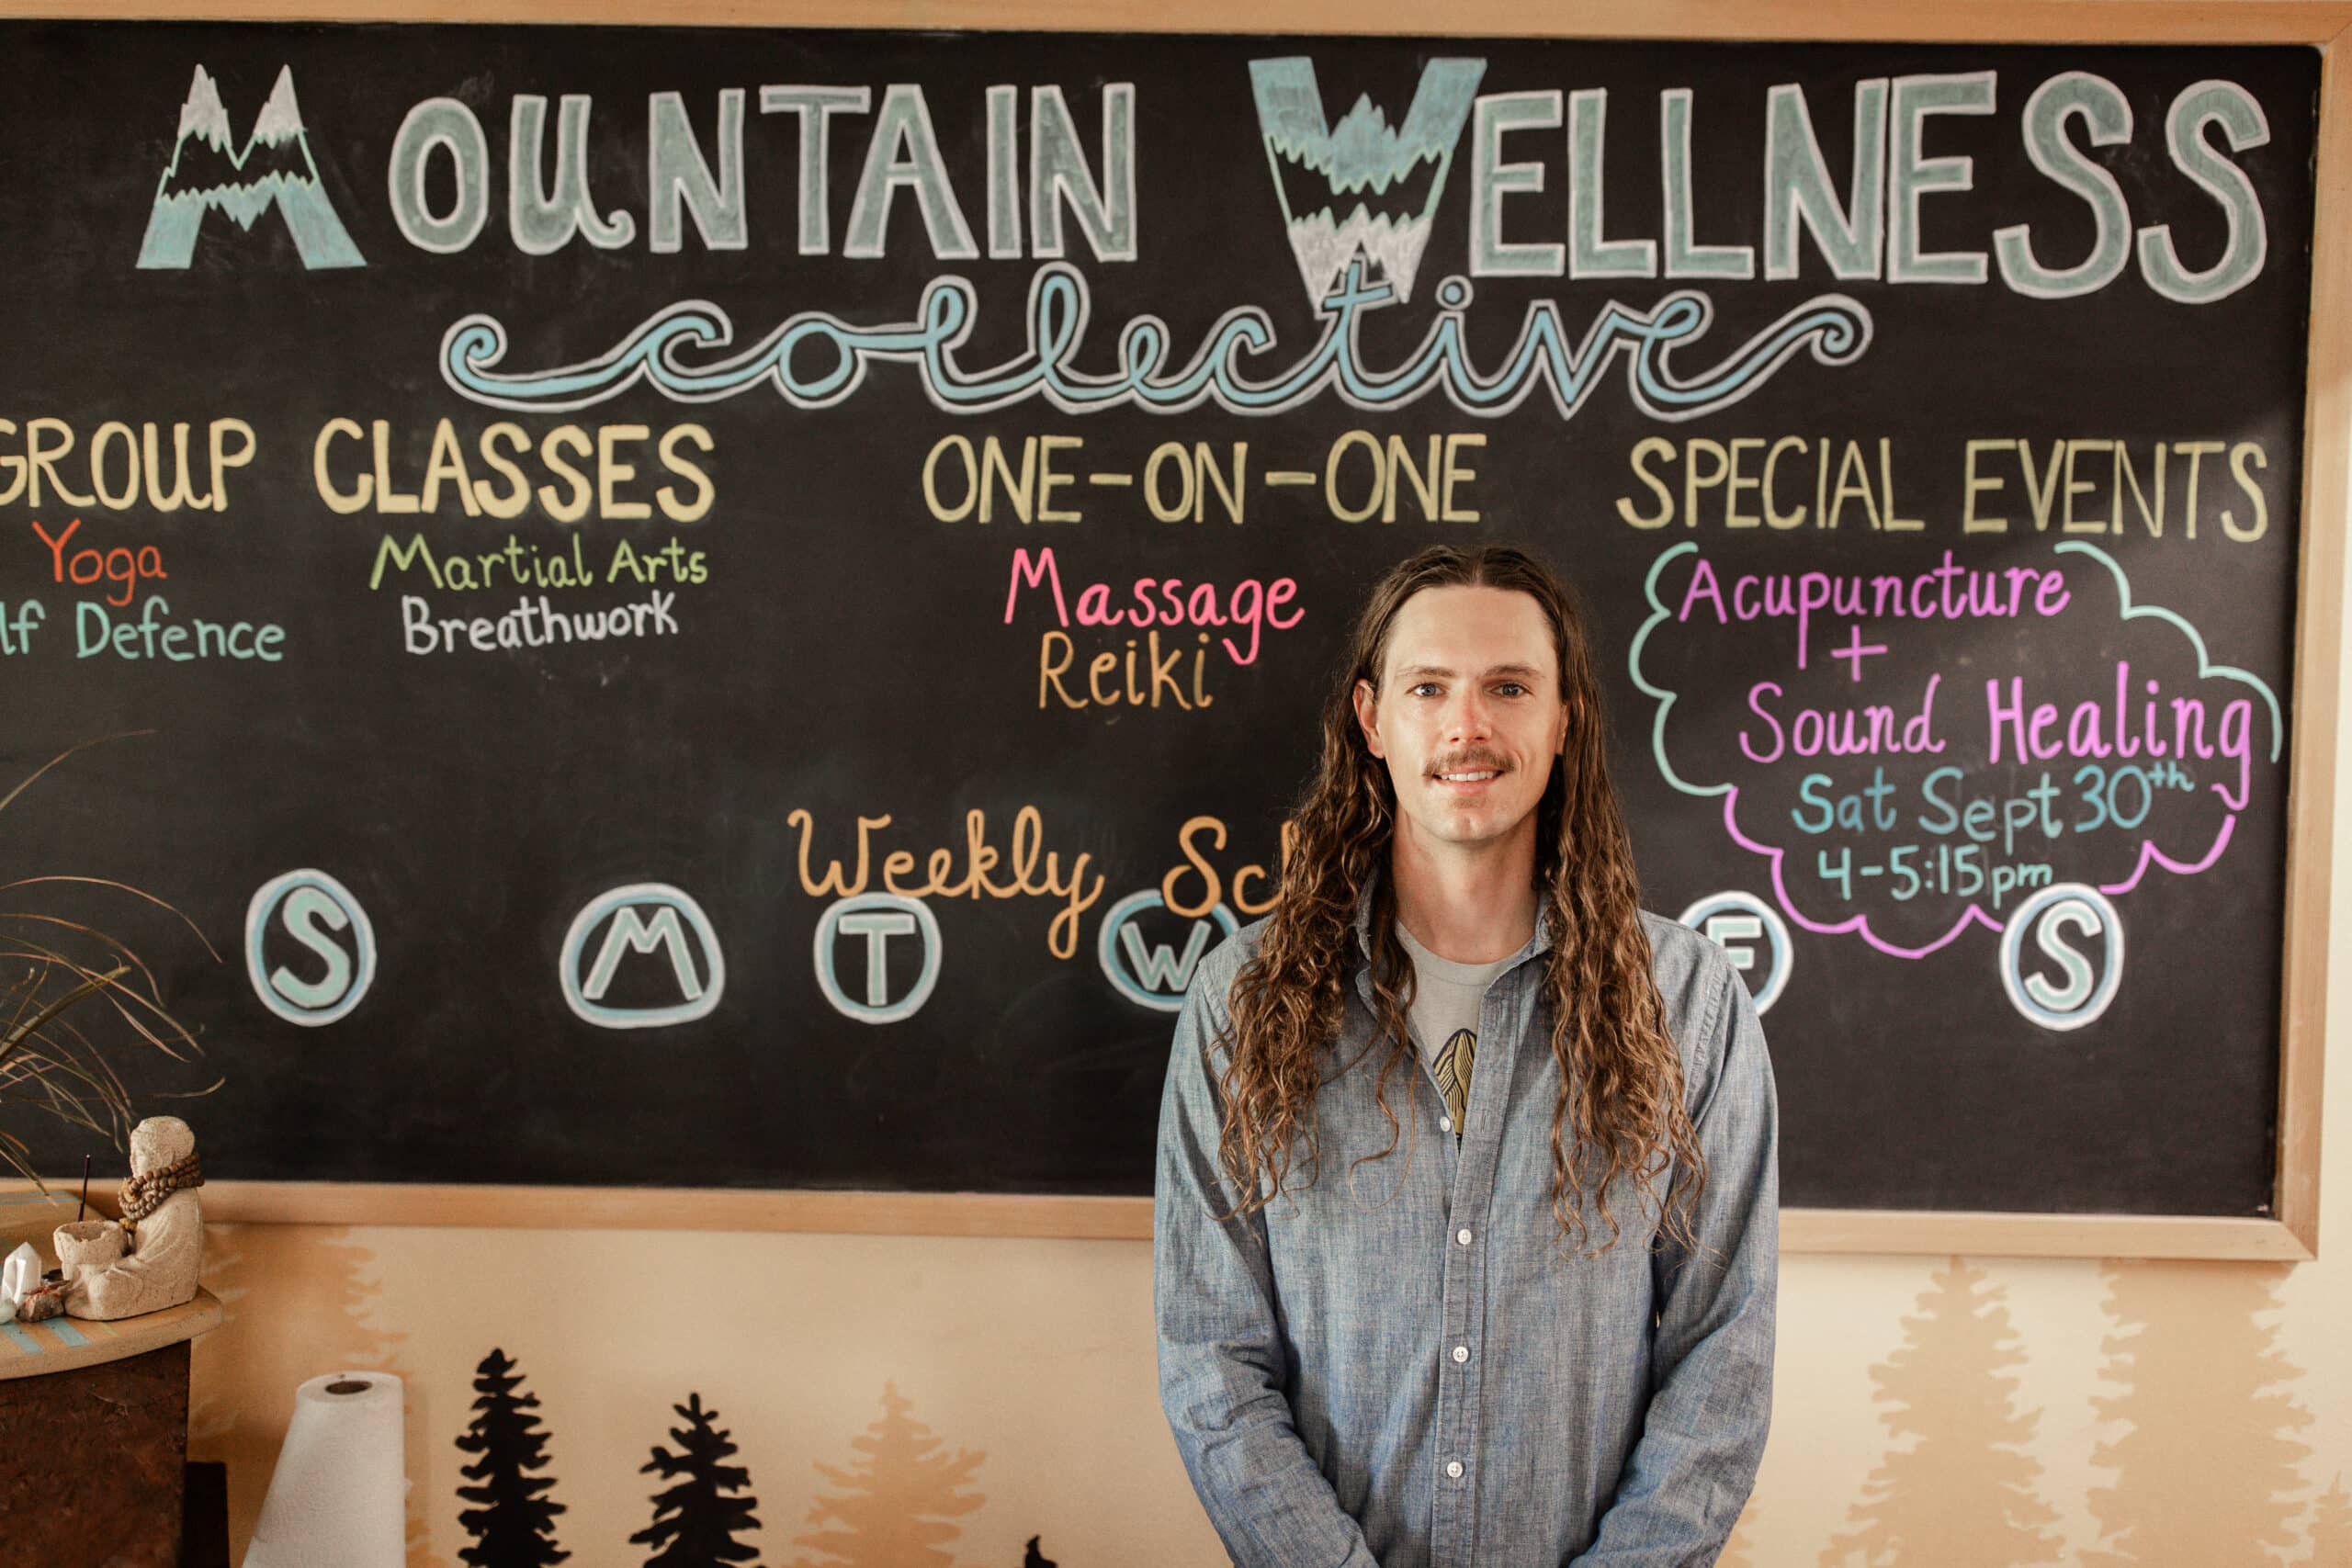 Mountain wellness collective